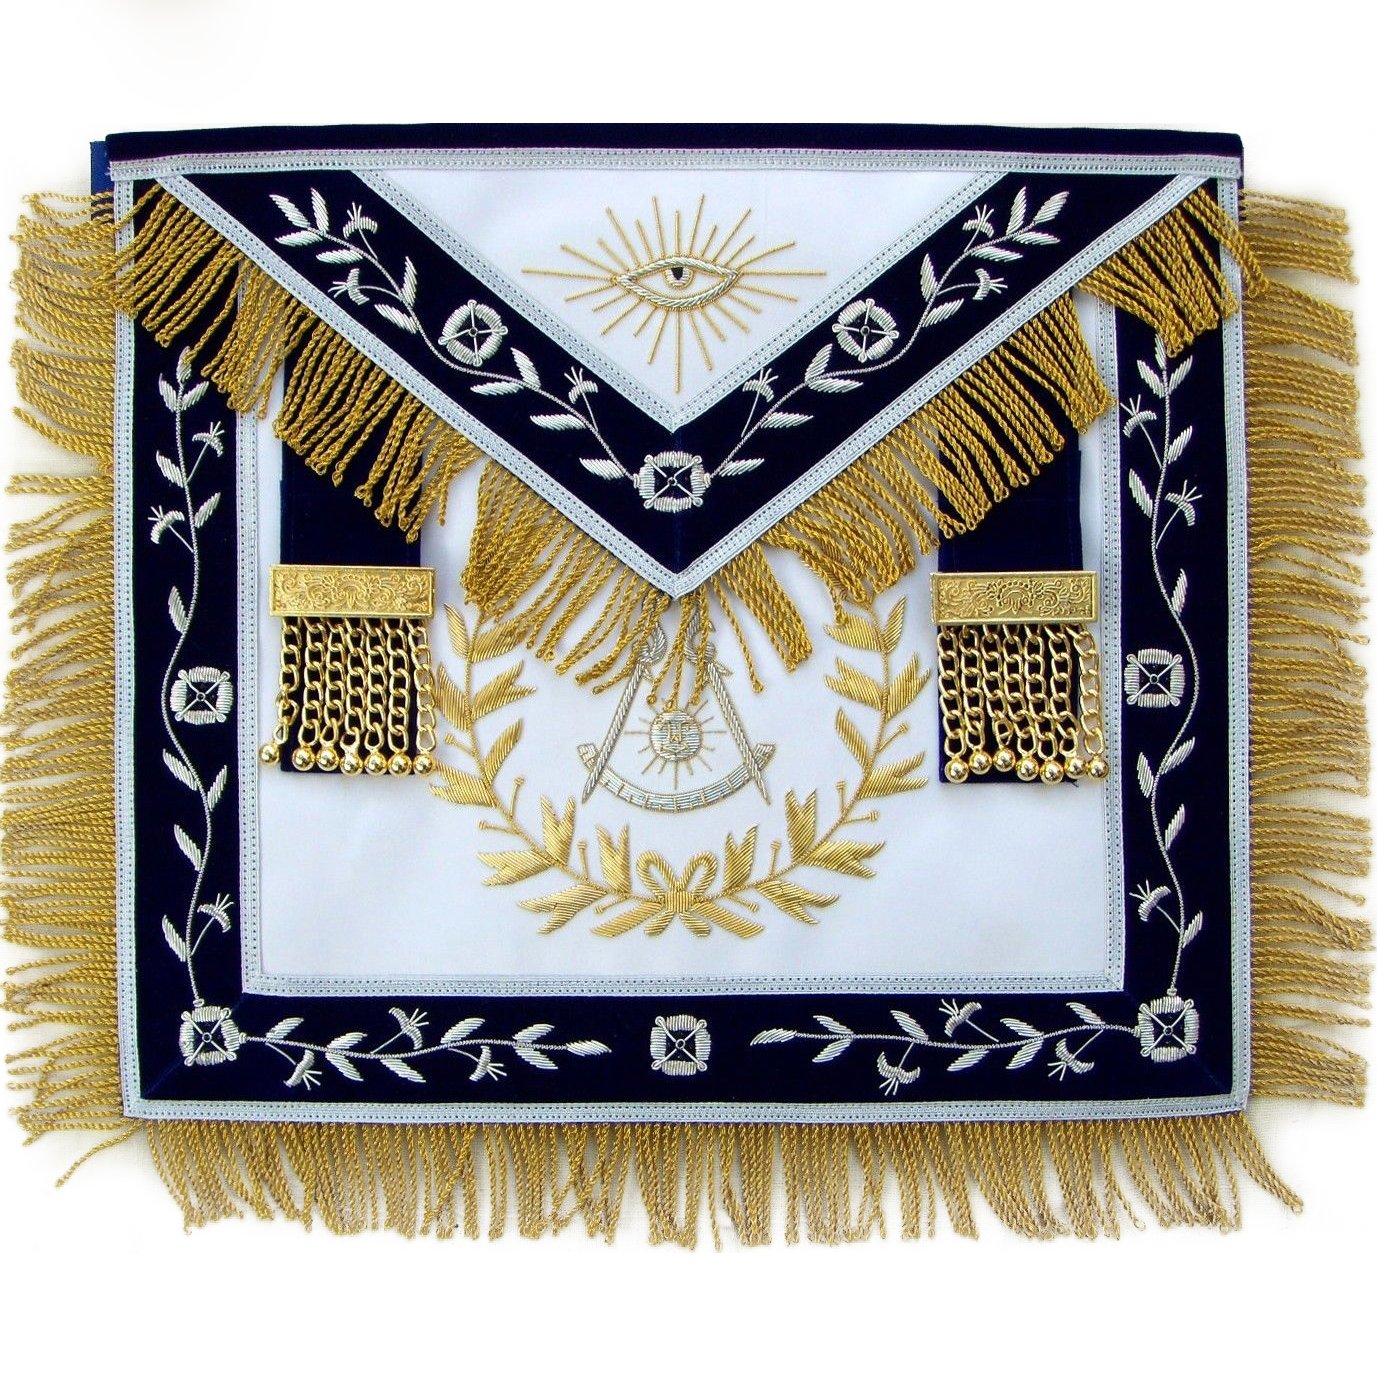 Past Master Blue Lodge Apron - Silver Braid & Golden Fringe Tassels Hand Embroidery - Bricks Masons